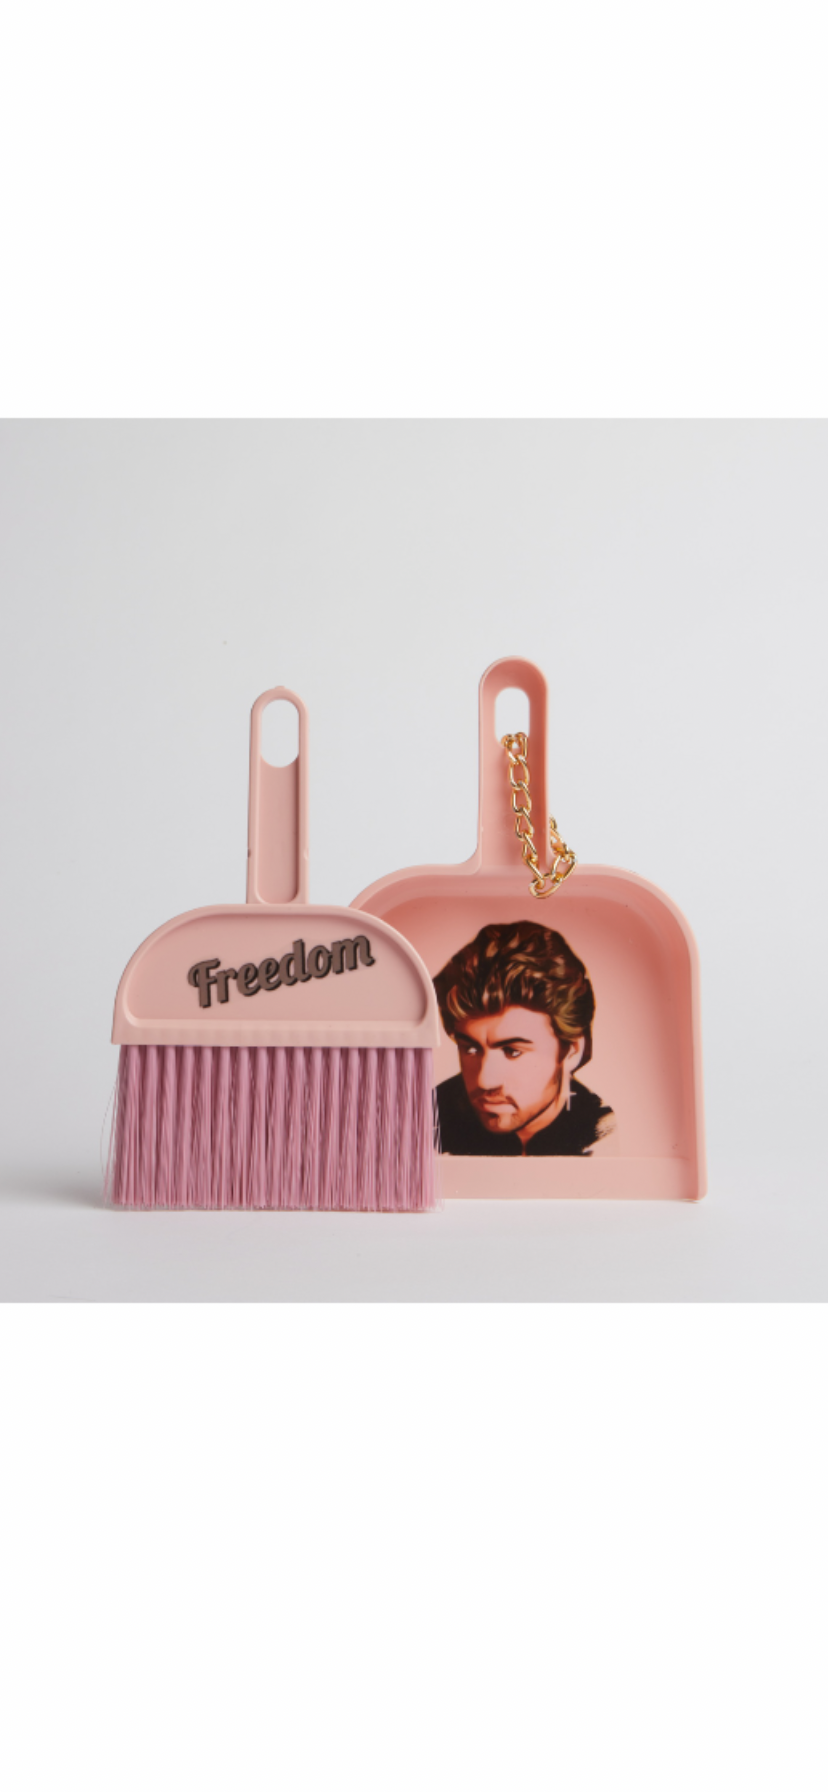 George Michael dustpan and brush